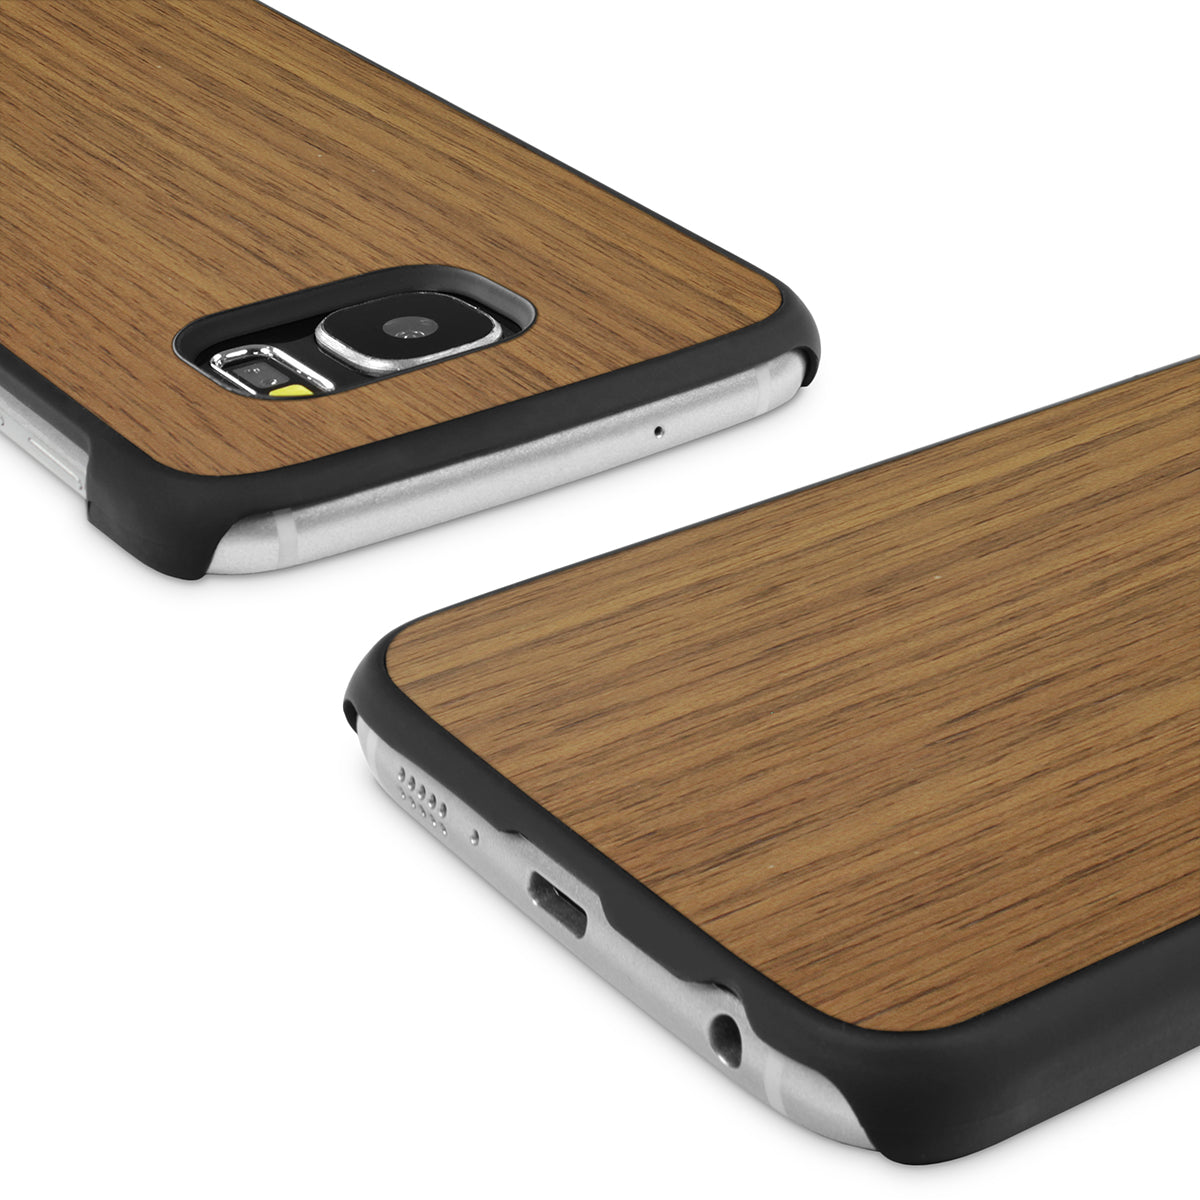 Samsung Galaxy S7 — #WoodBack Snap Case